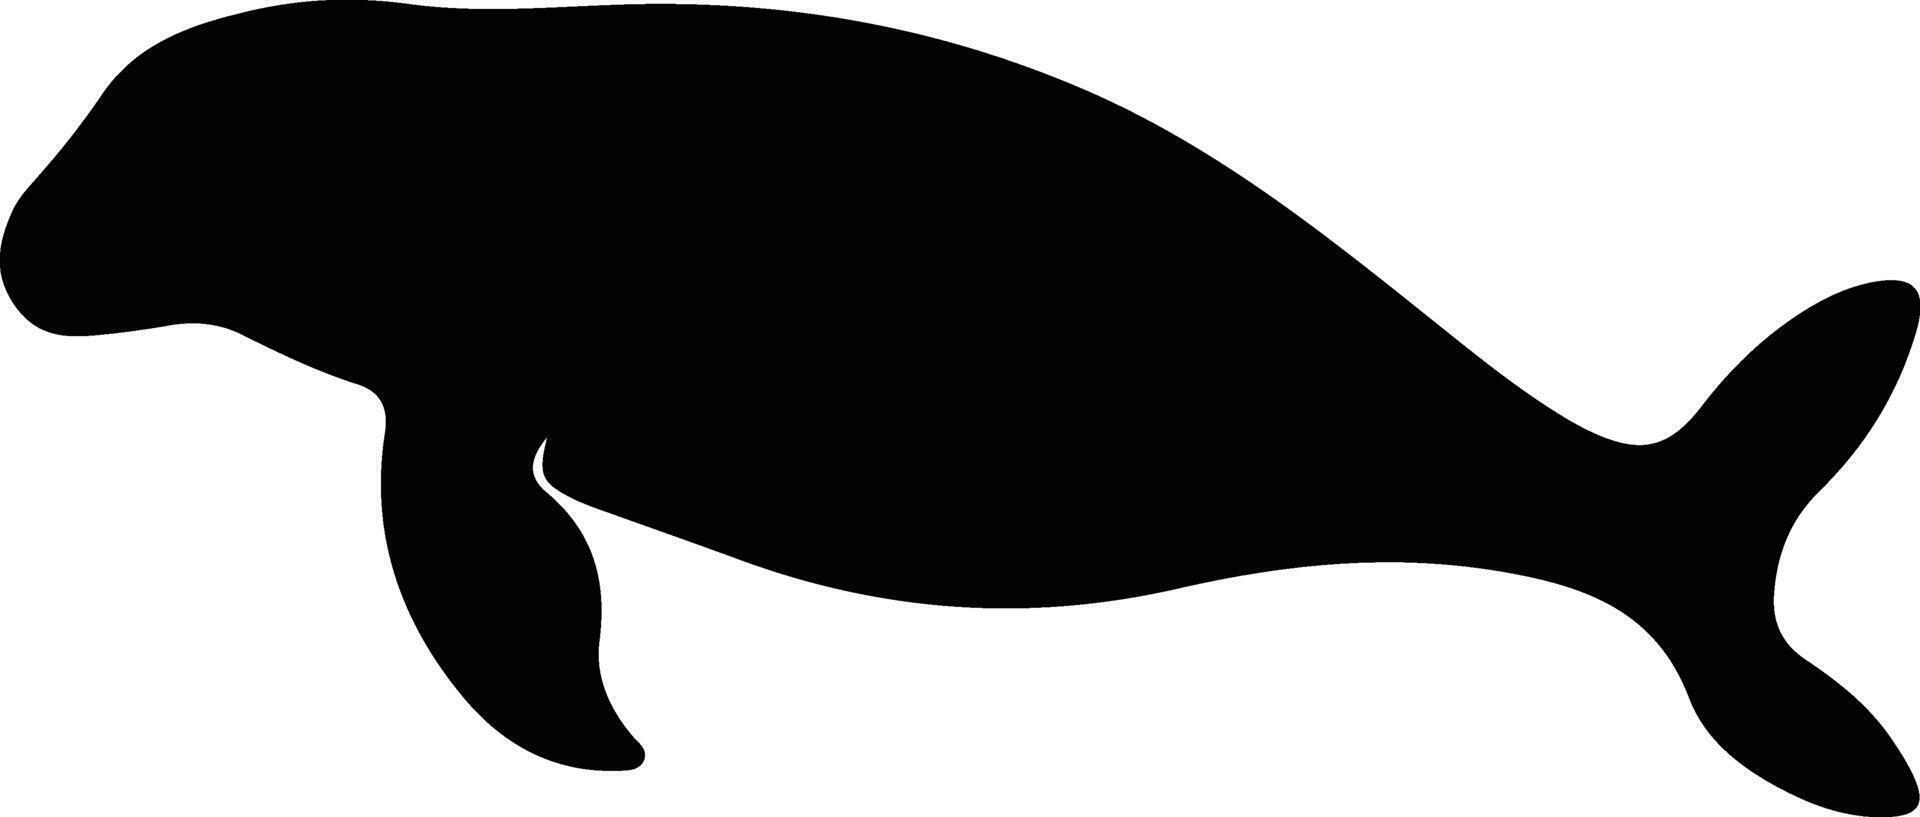 dugongo nero silhouette vettore